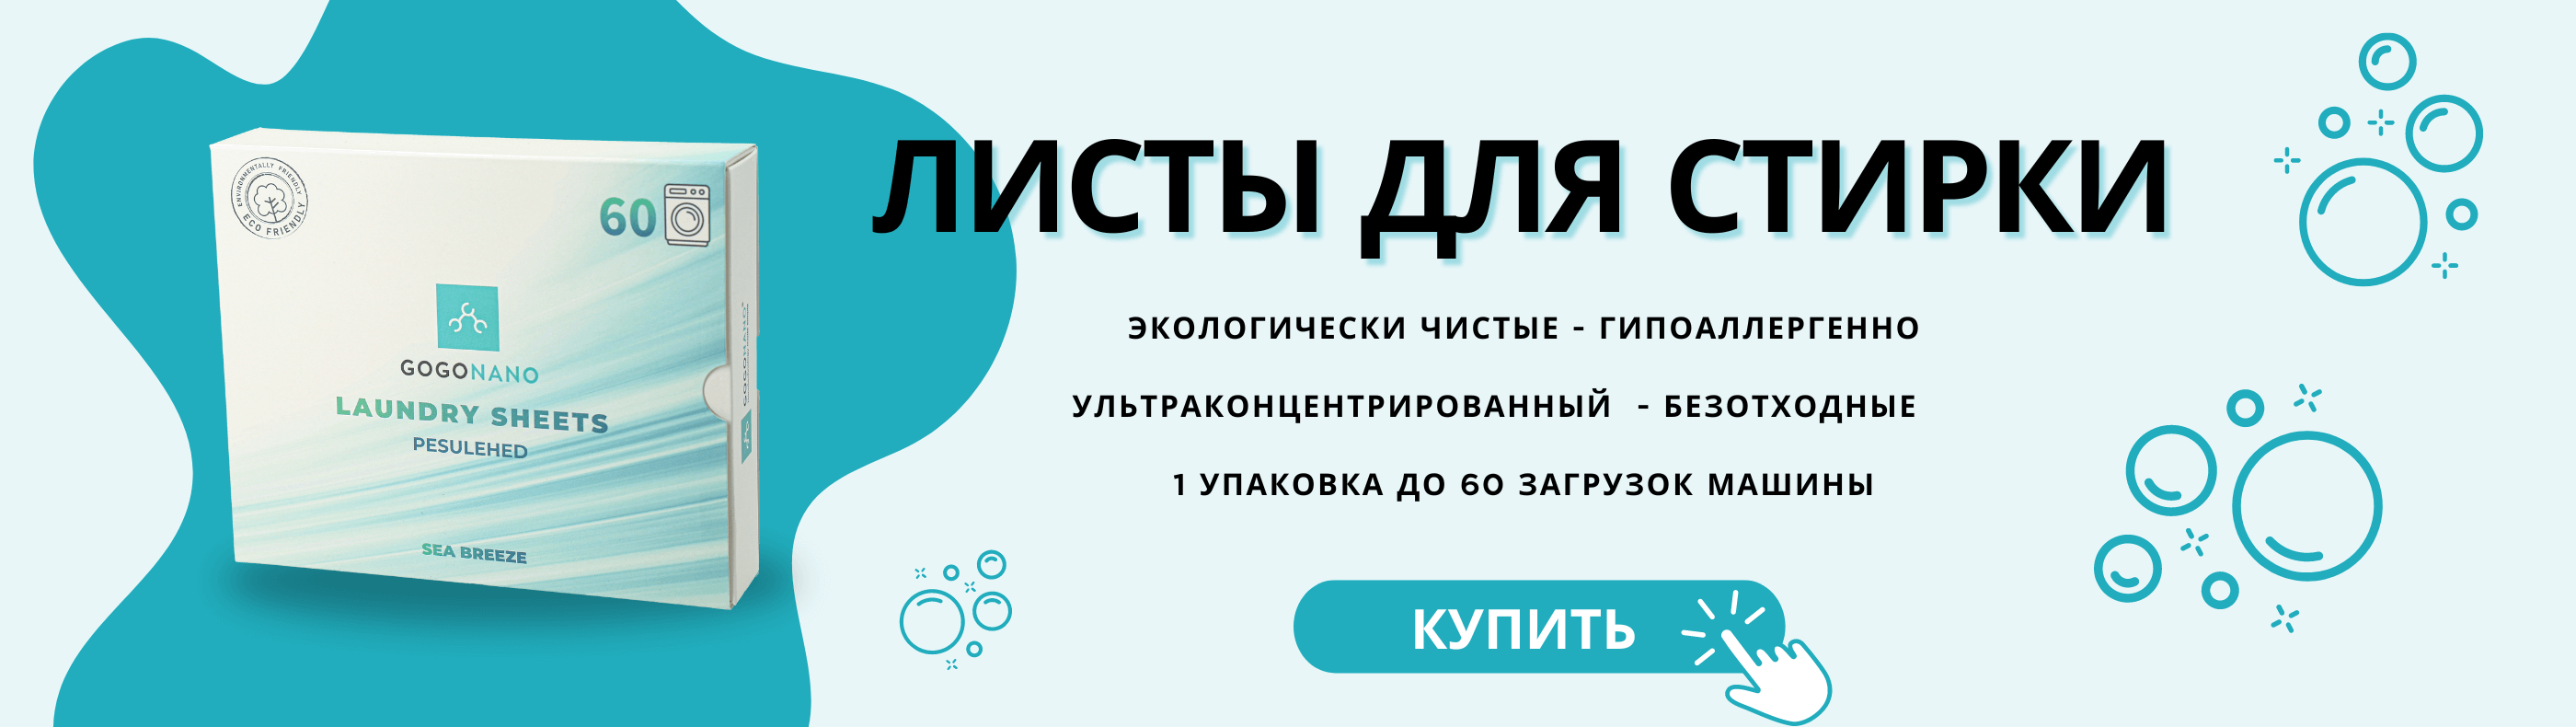 Laundry strips banner homepage desktop russian